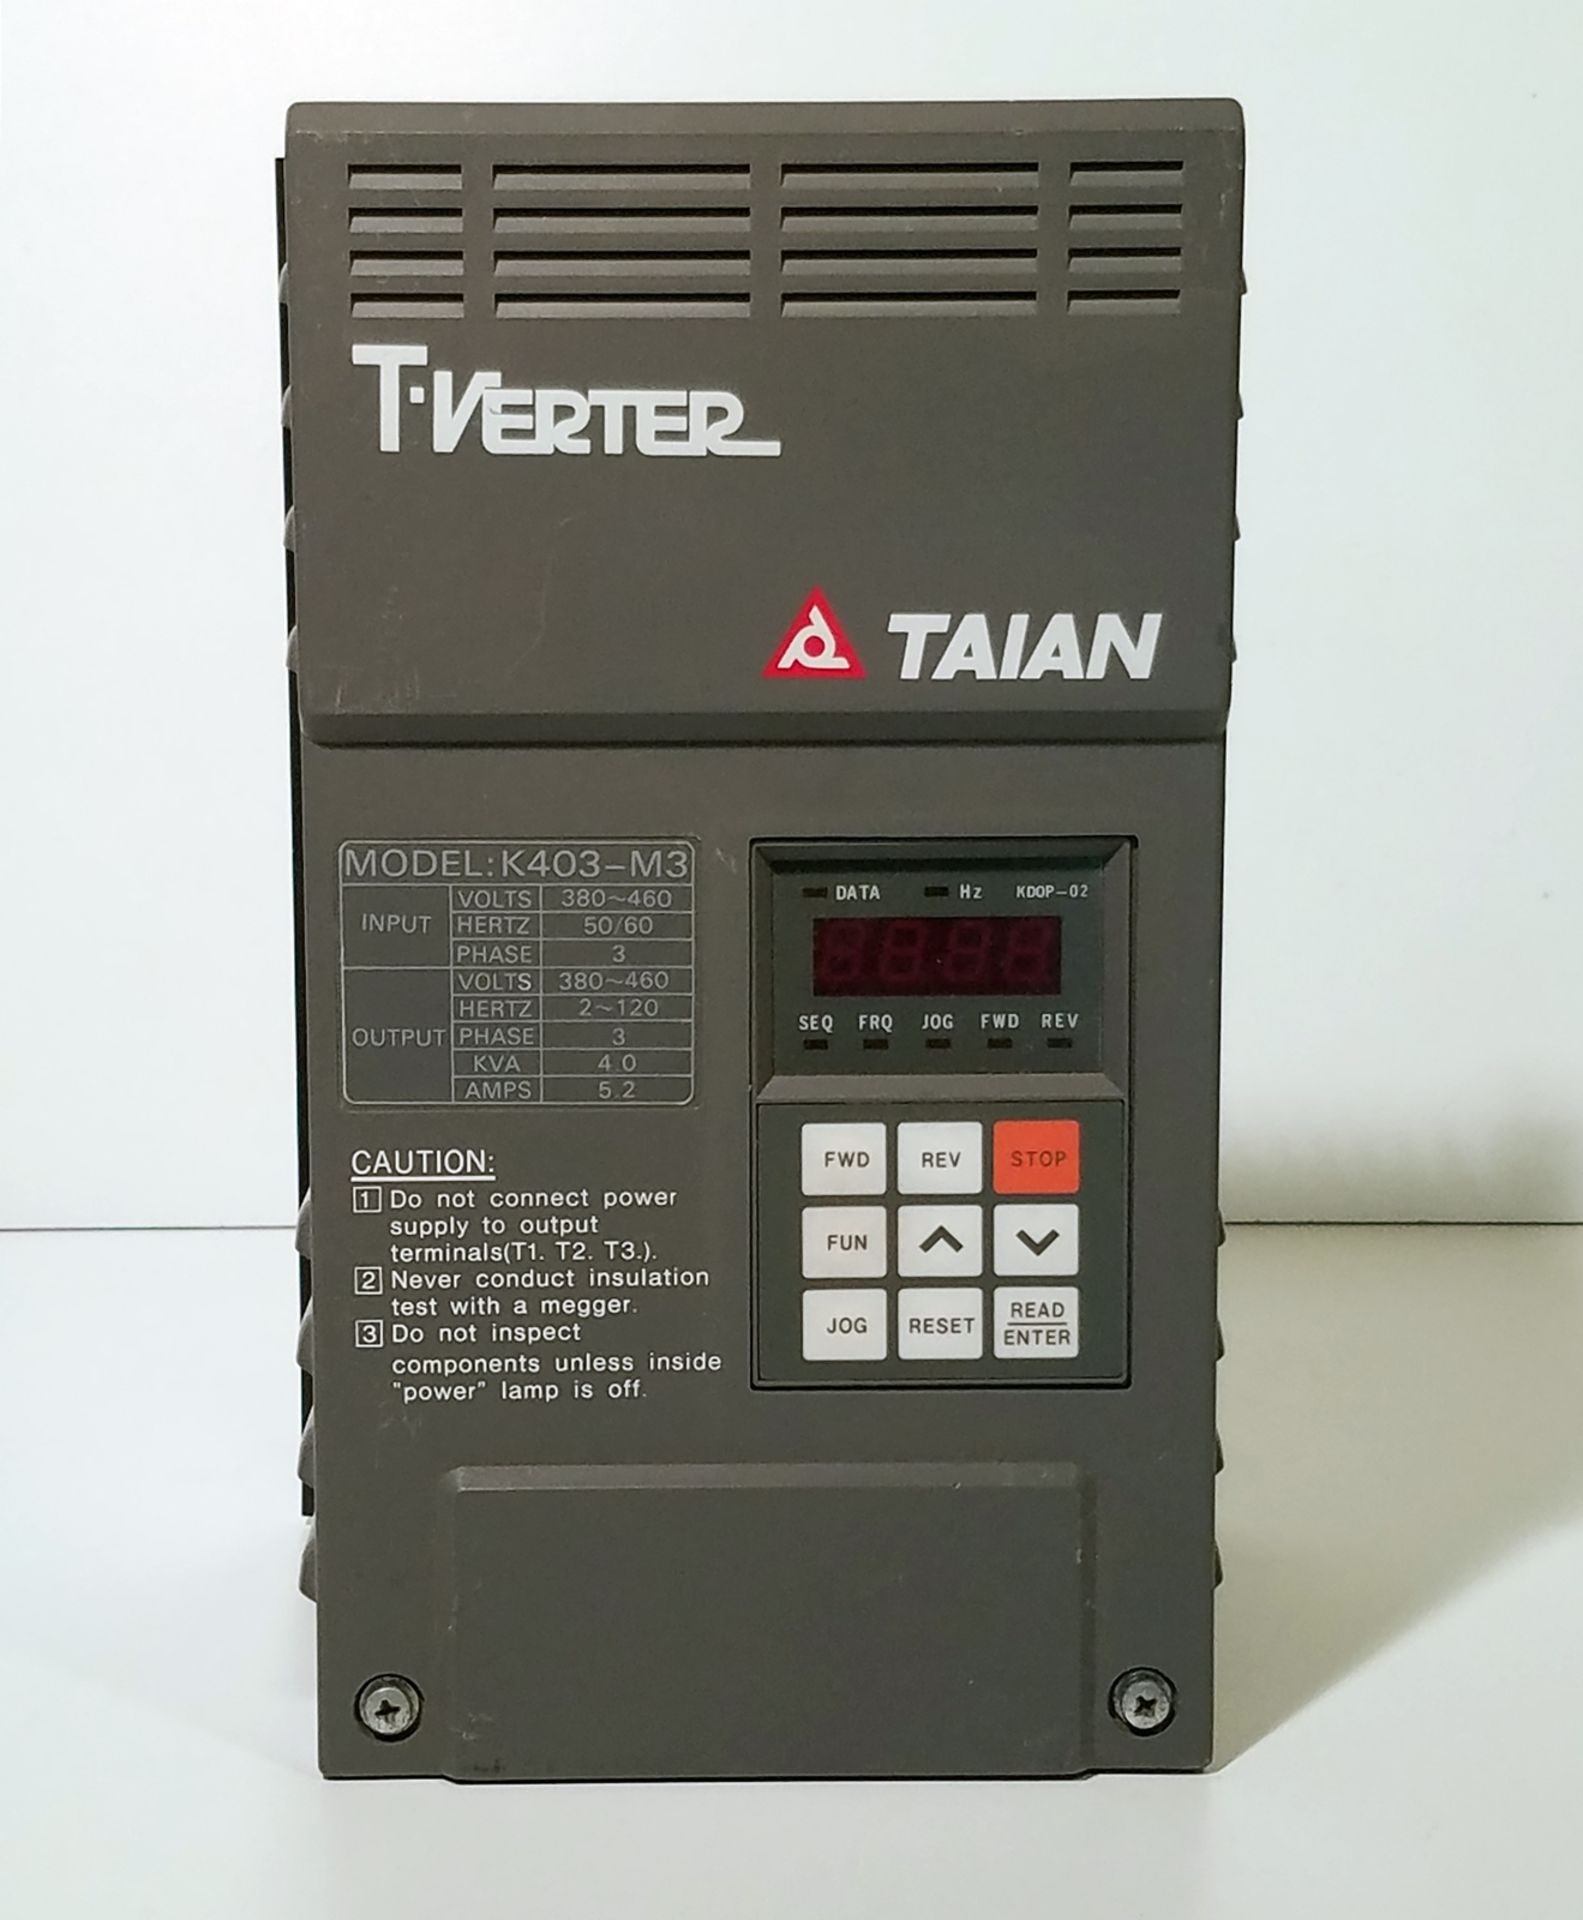 Taian K403-M3 T-Verter AC Drive, 4KVA/5.2 Amps - Image 2 of 4